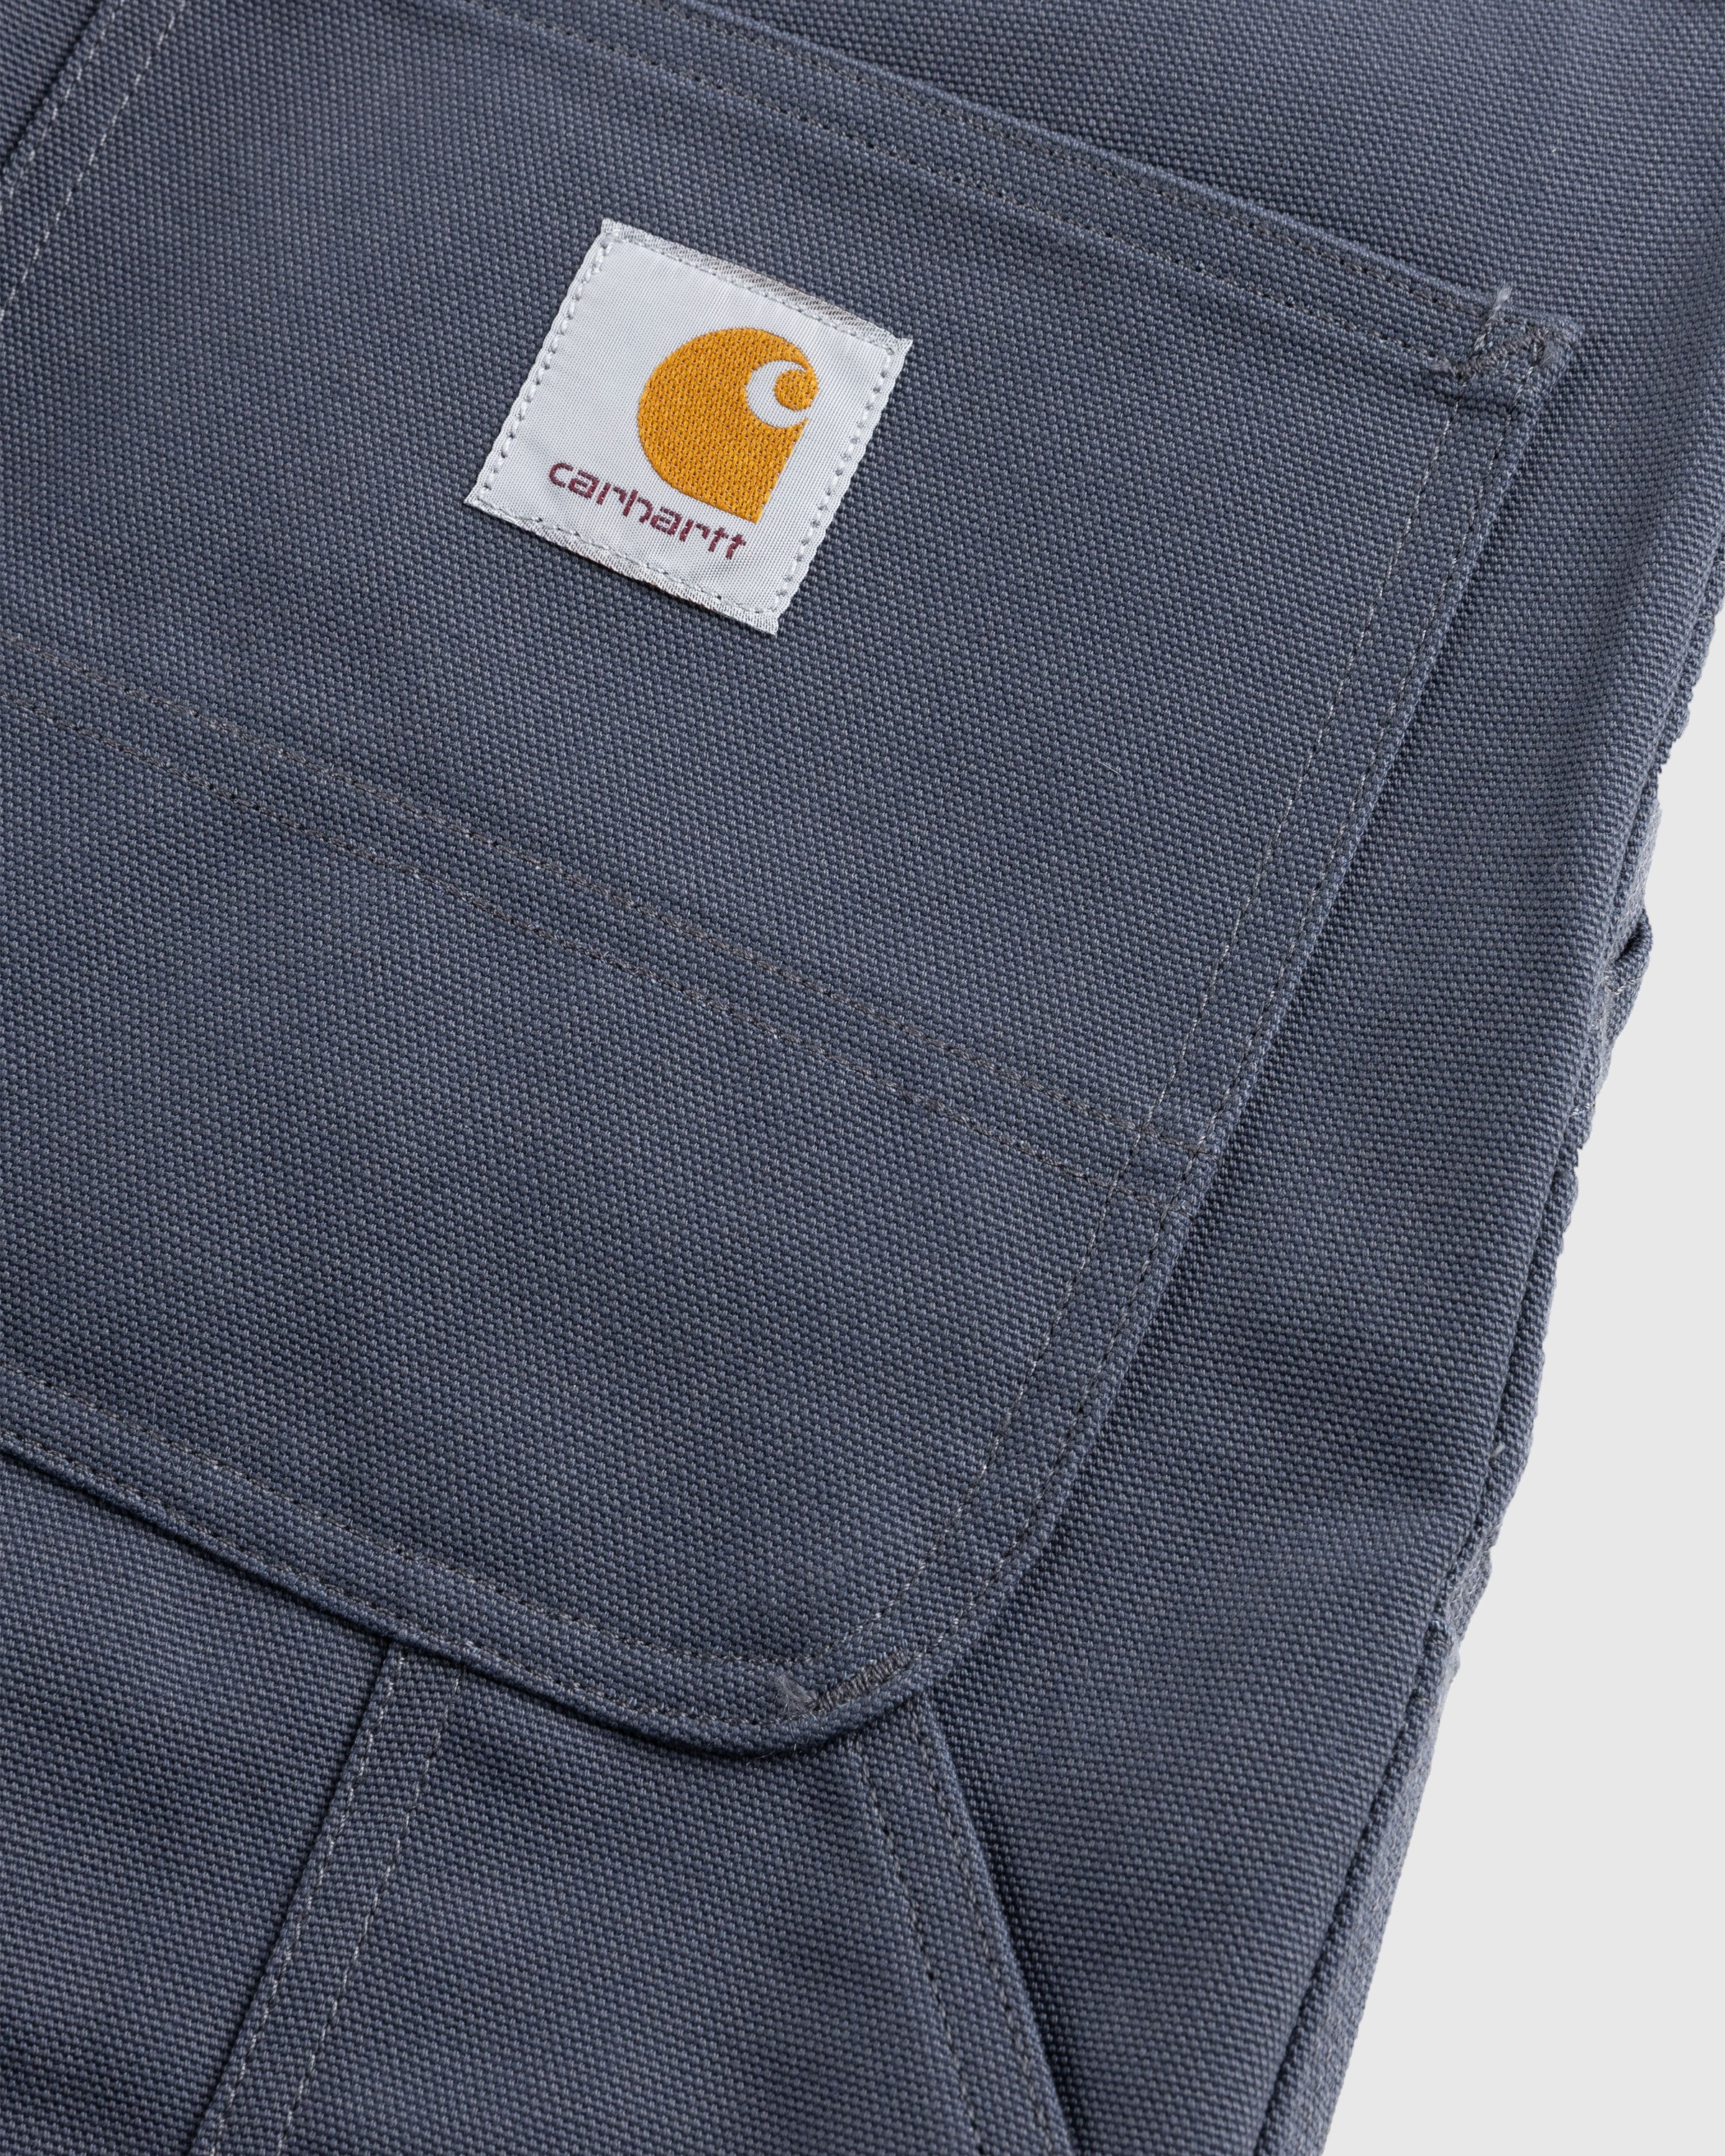 Carhartt WIP - Double Knee Pant Zeus/Rigid - Clothing - Grey - Image 6